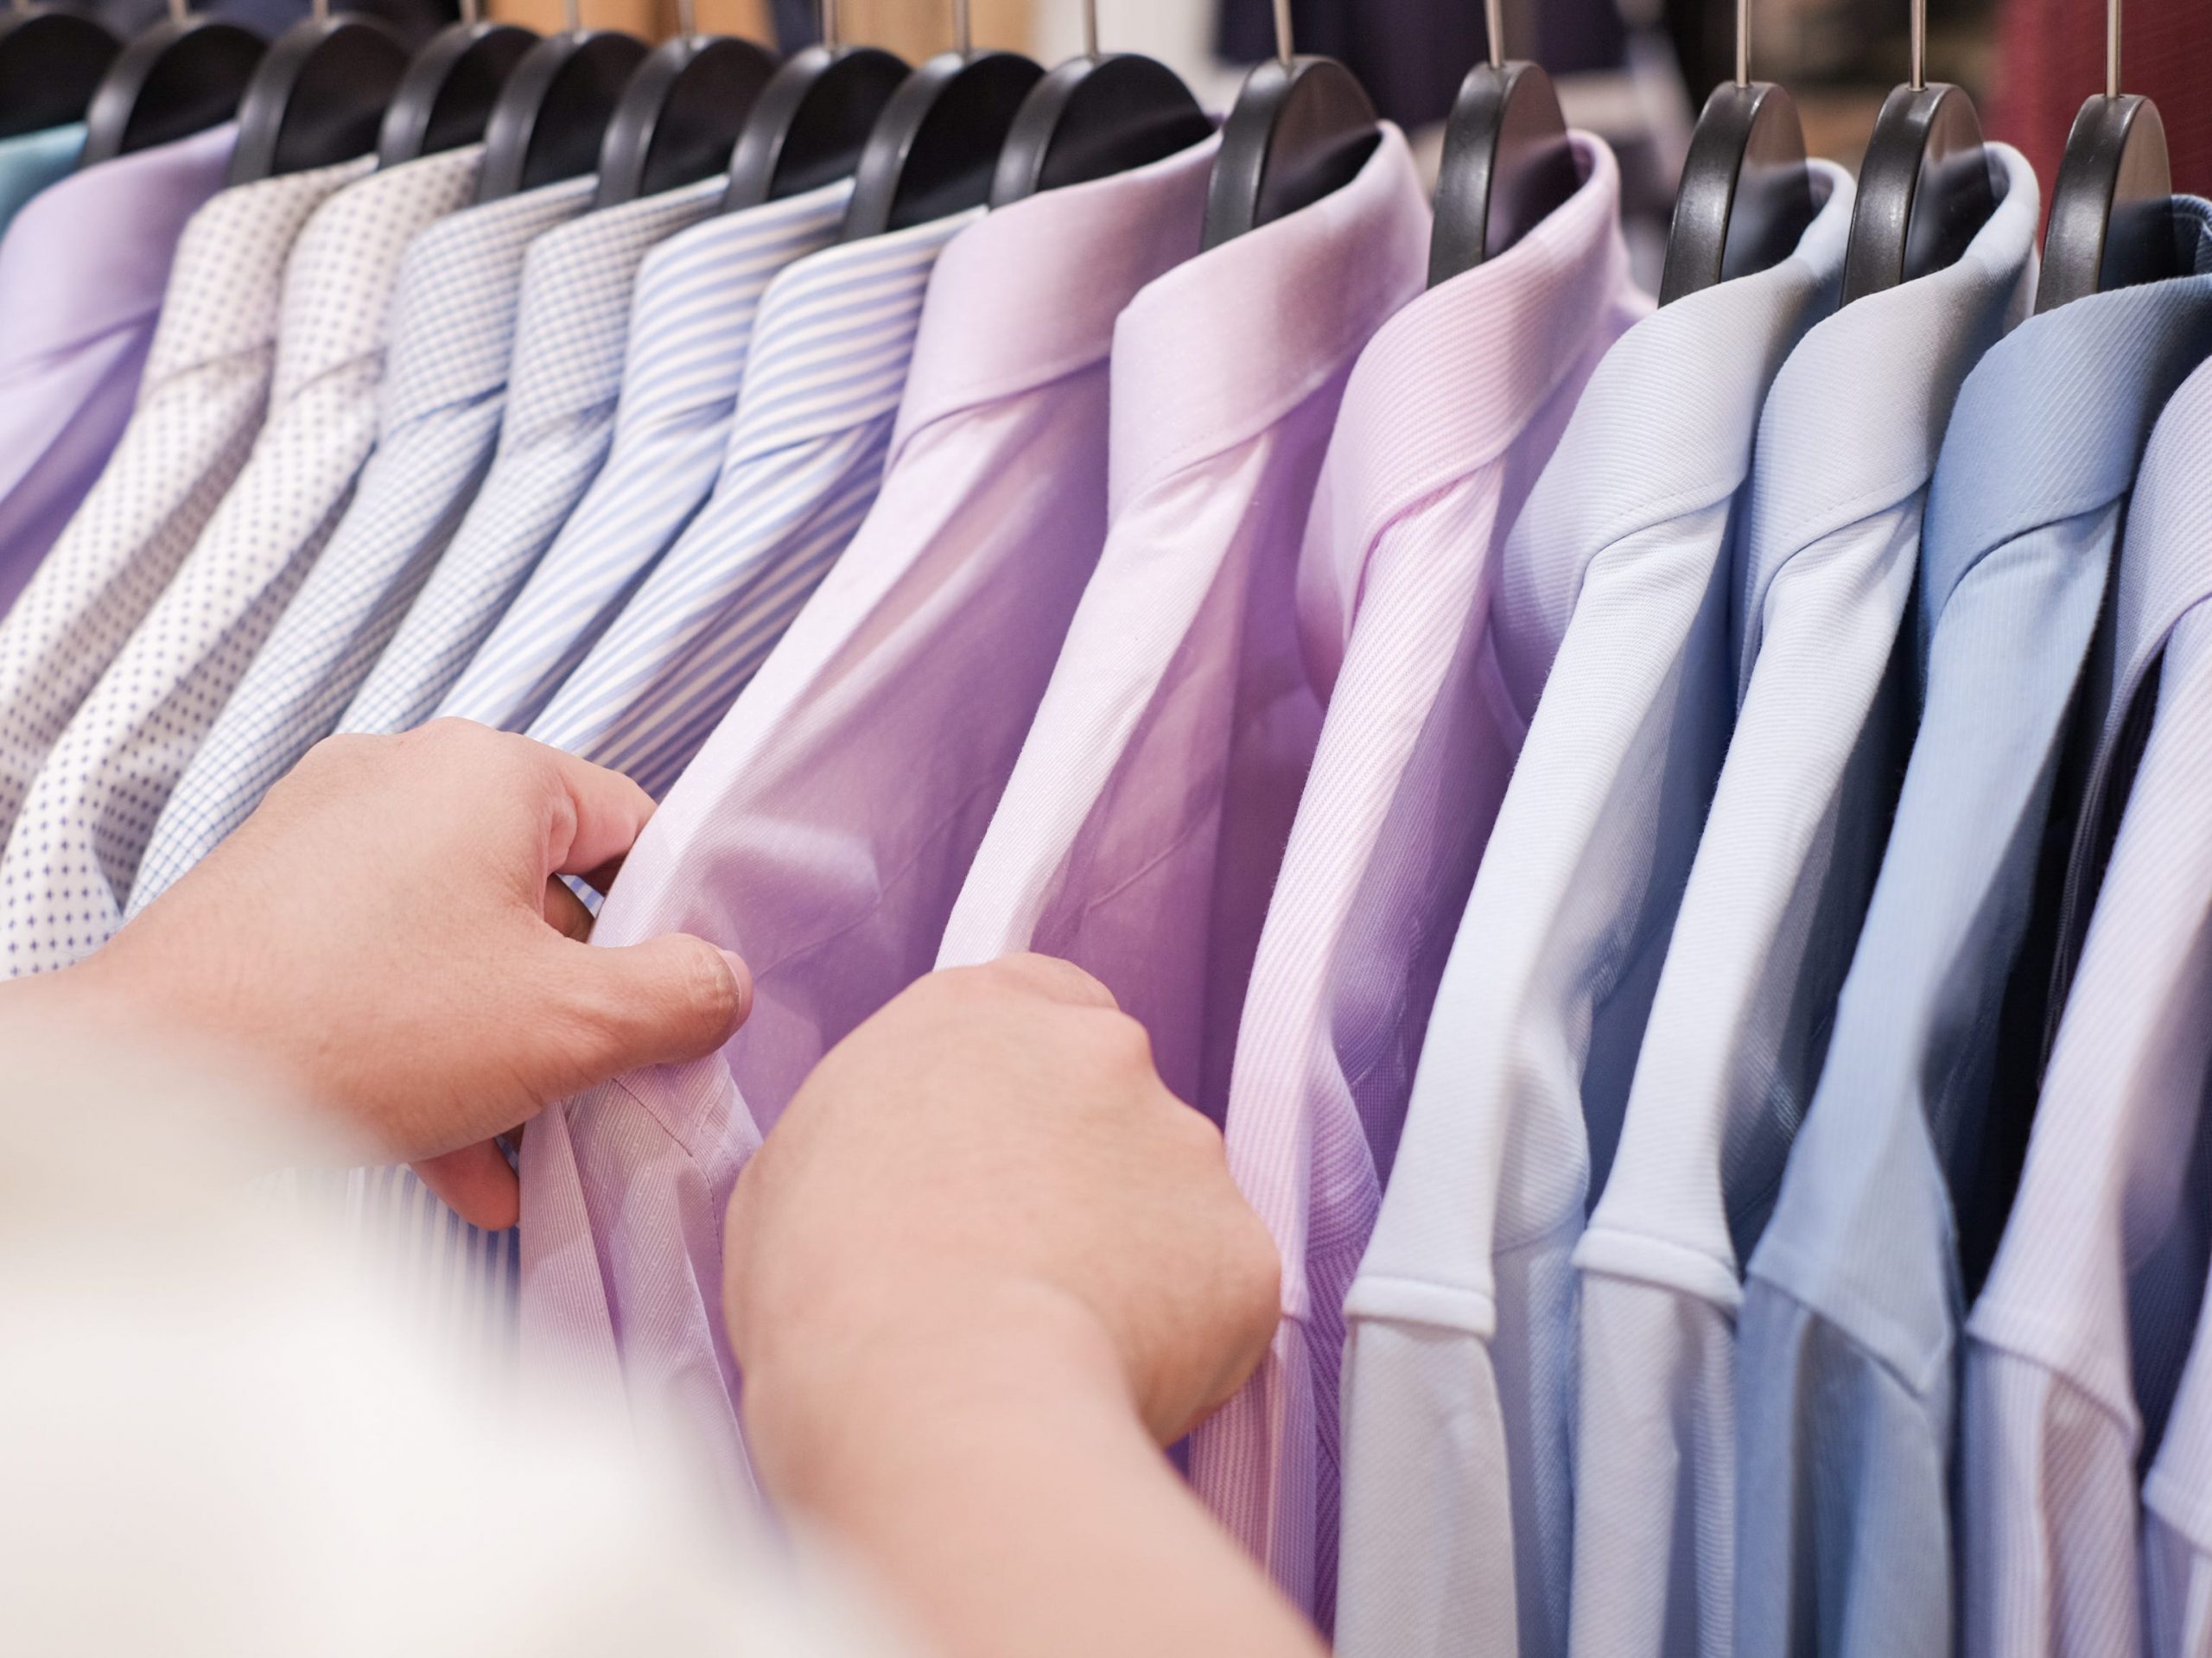 Hands sorting through men's dress shirts